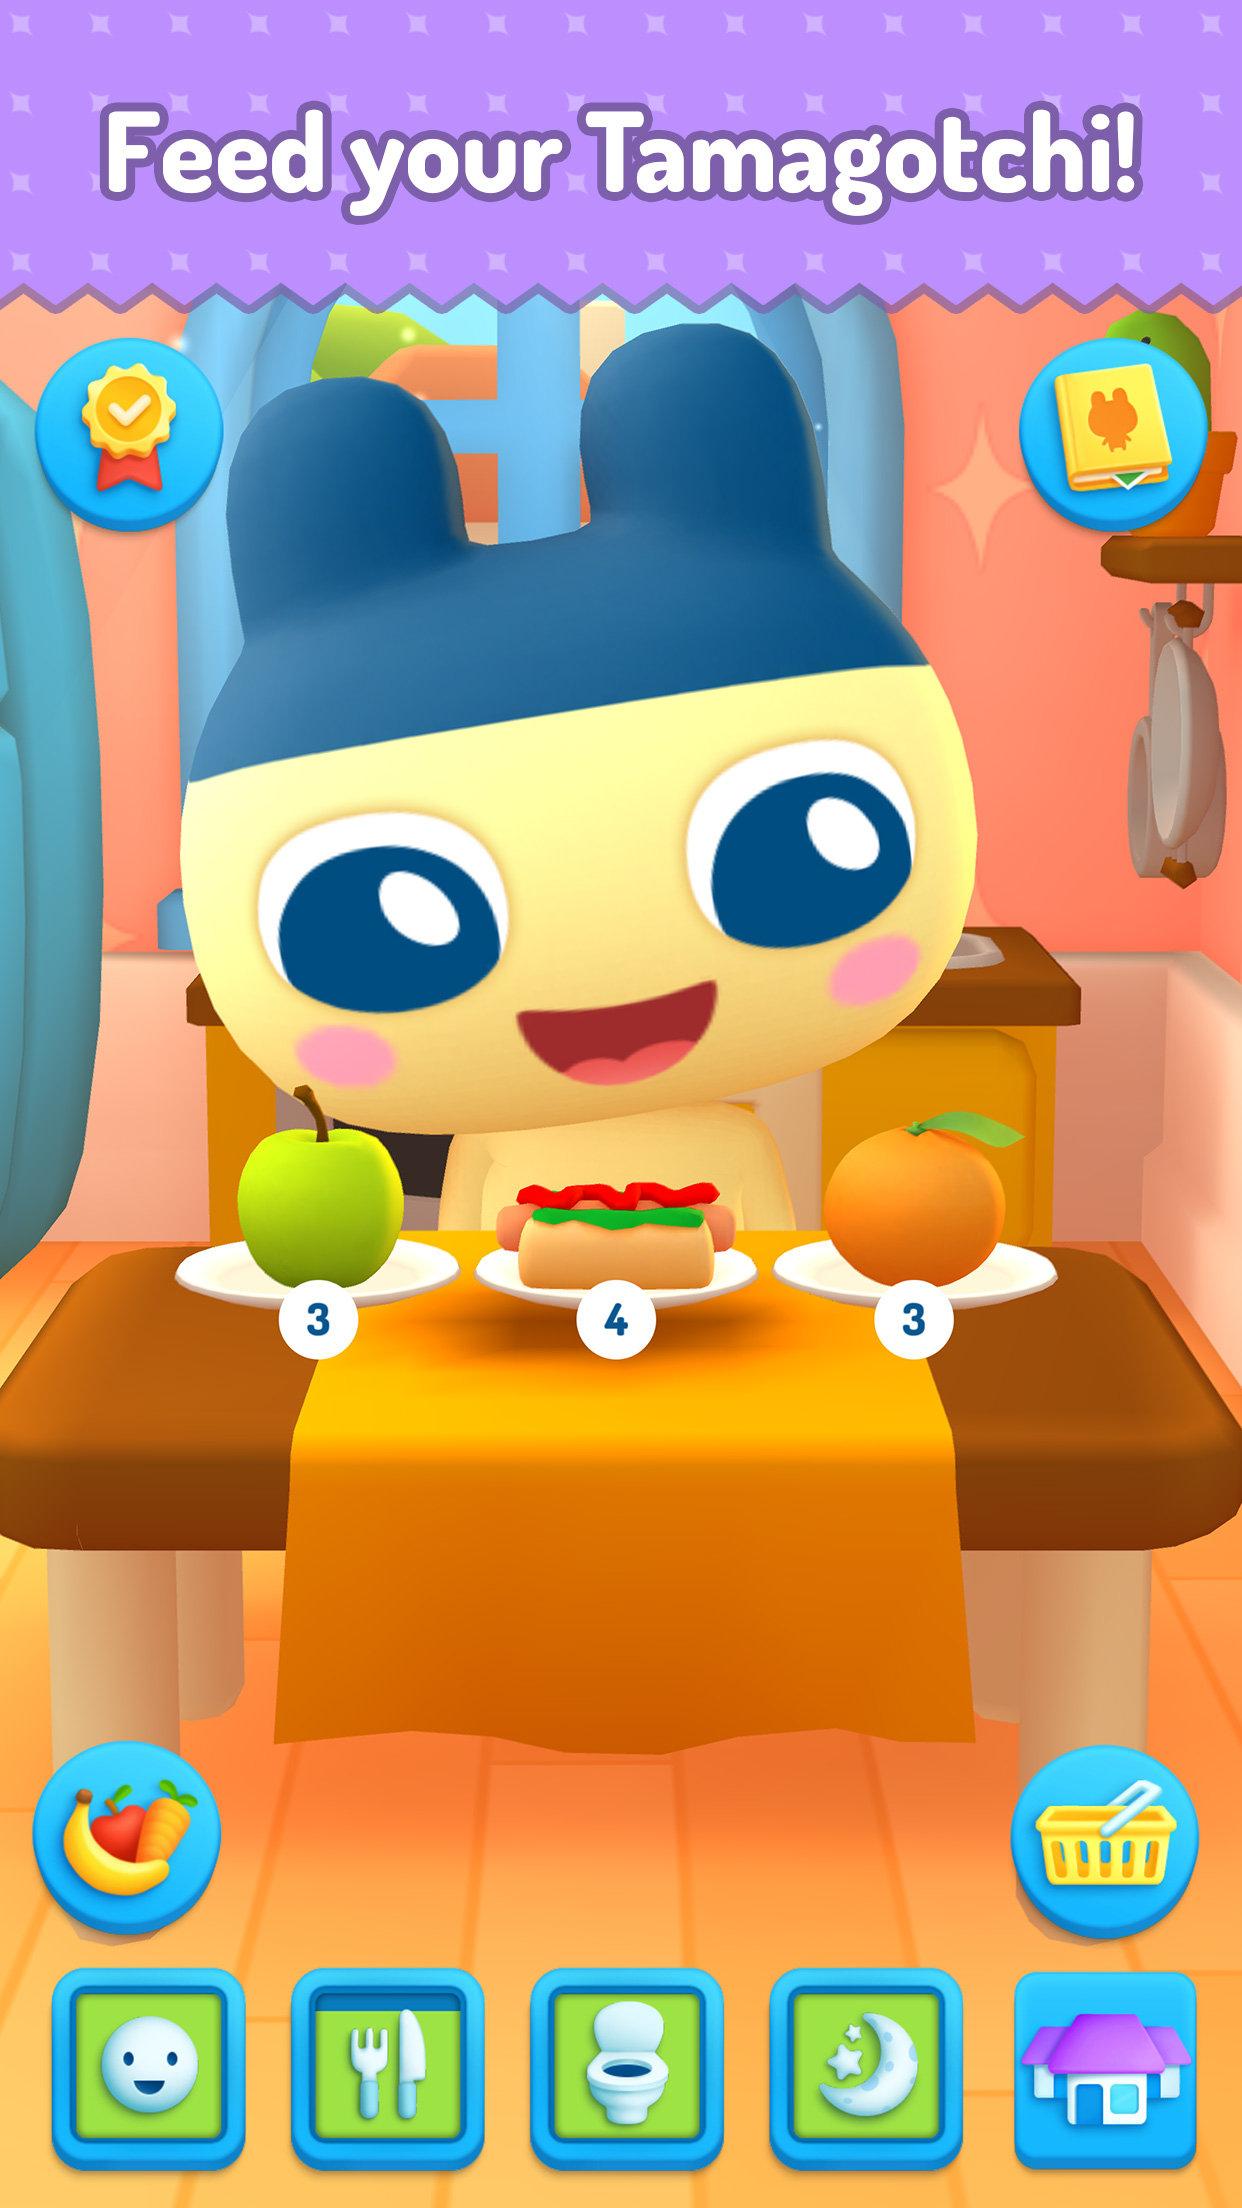 Bild på spelet "My tamagotchi forever".